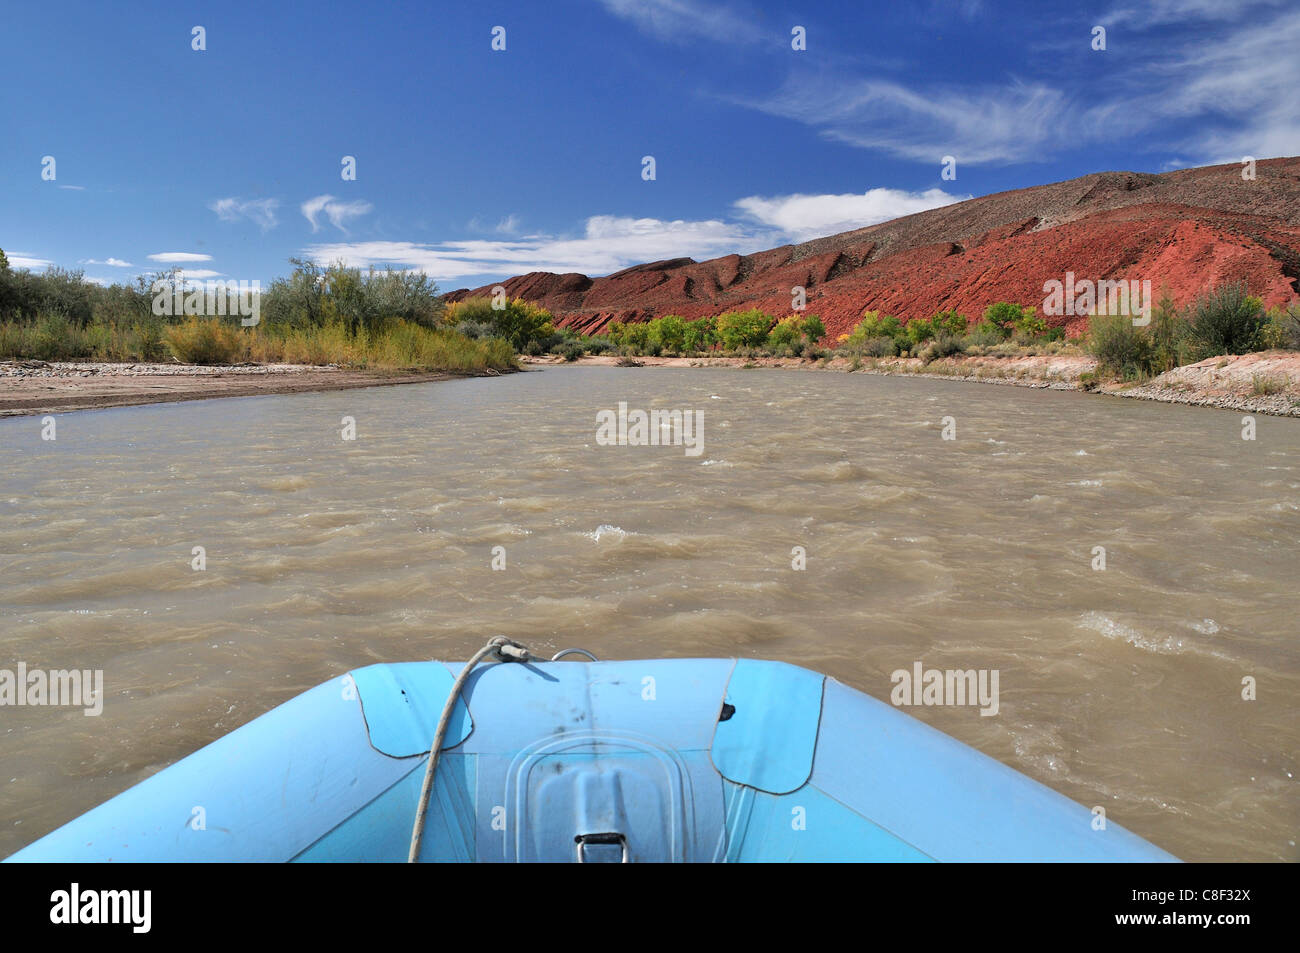 San Juan River in der Nähe von Bluff, Fluss, Landschaft, Boot, Colorado Plateau, Utah, USA, USA, Amerika, rafting, Kautschuk Stockfoto